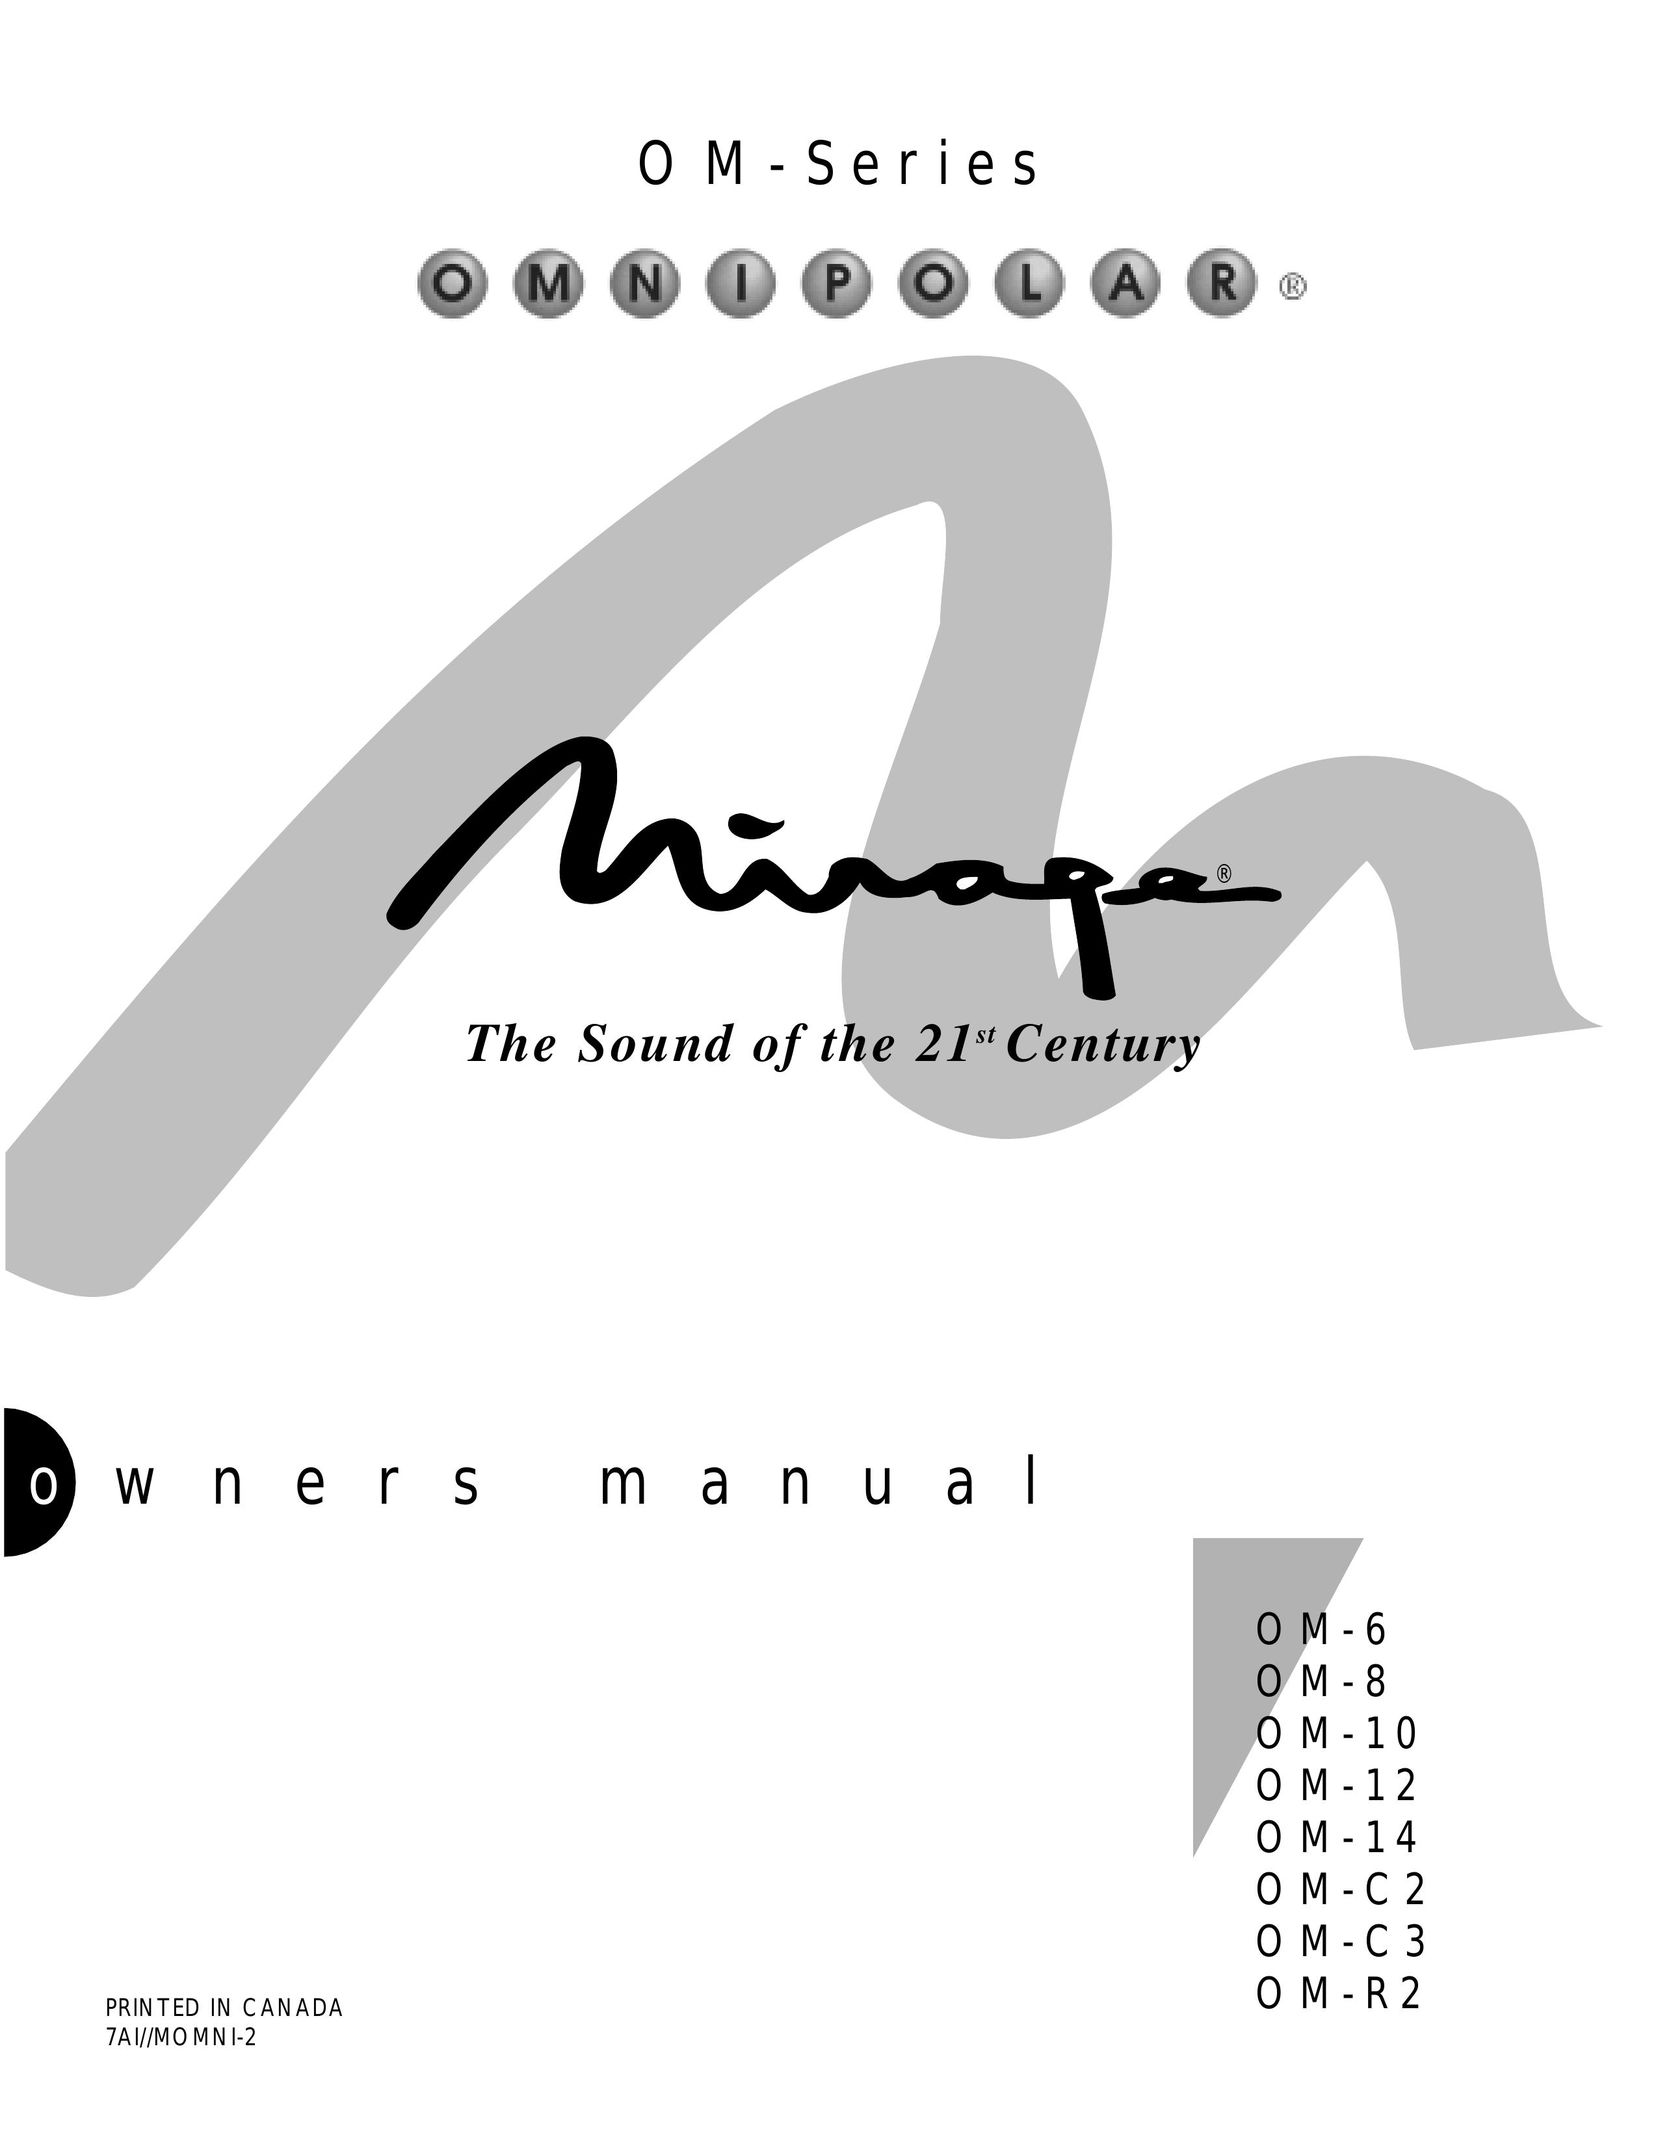 Mirage Loudspeakers O M - 1 4 Speaker User Manual